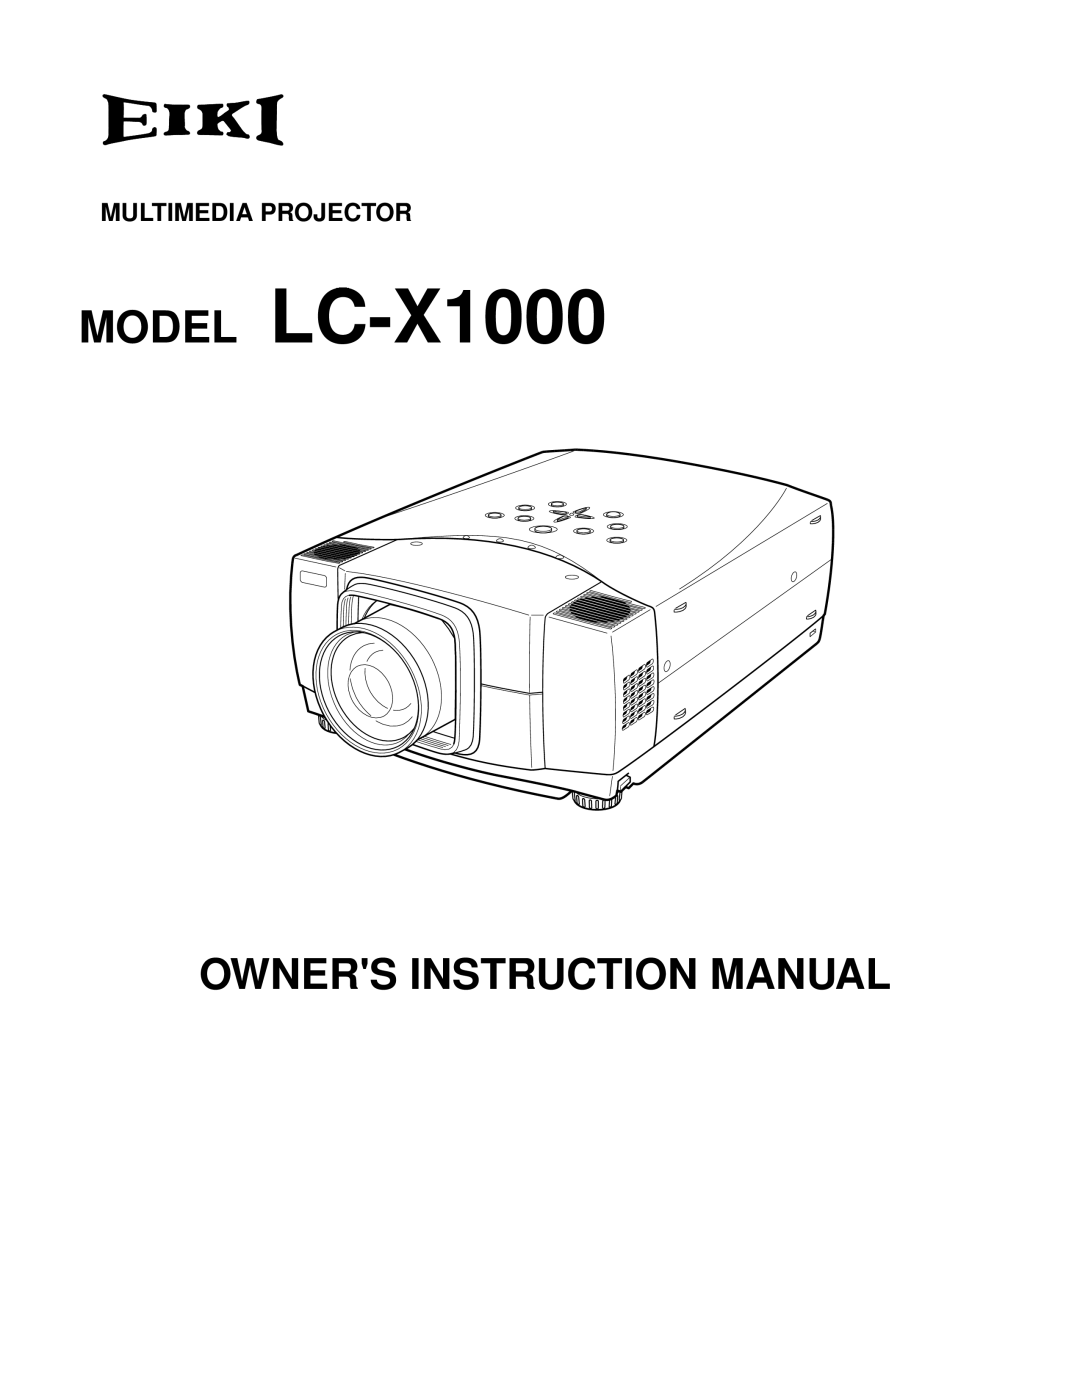 Eiki instruction manual MODEL LC-X1000 